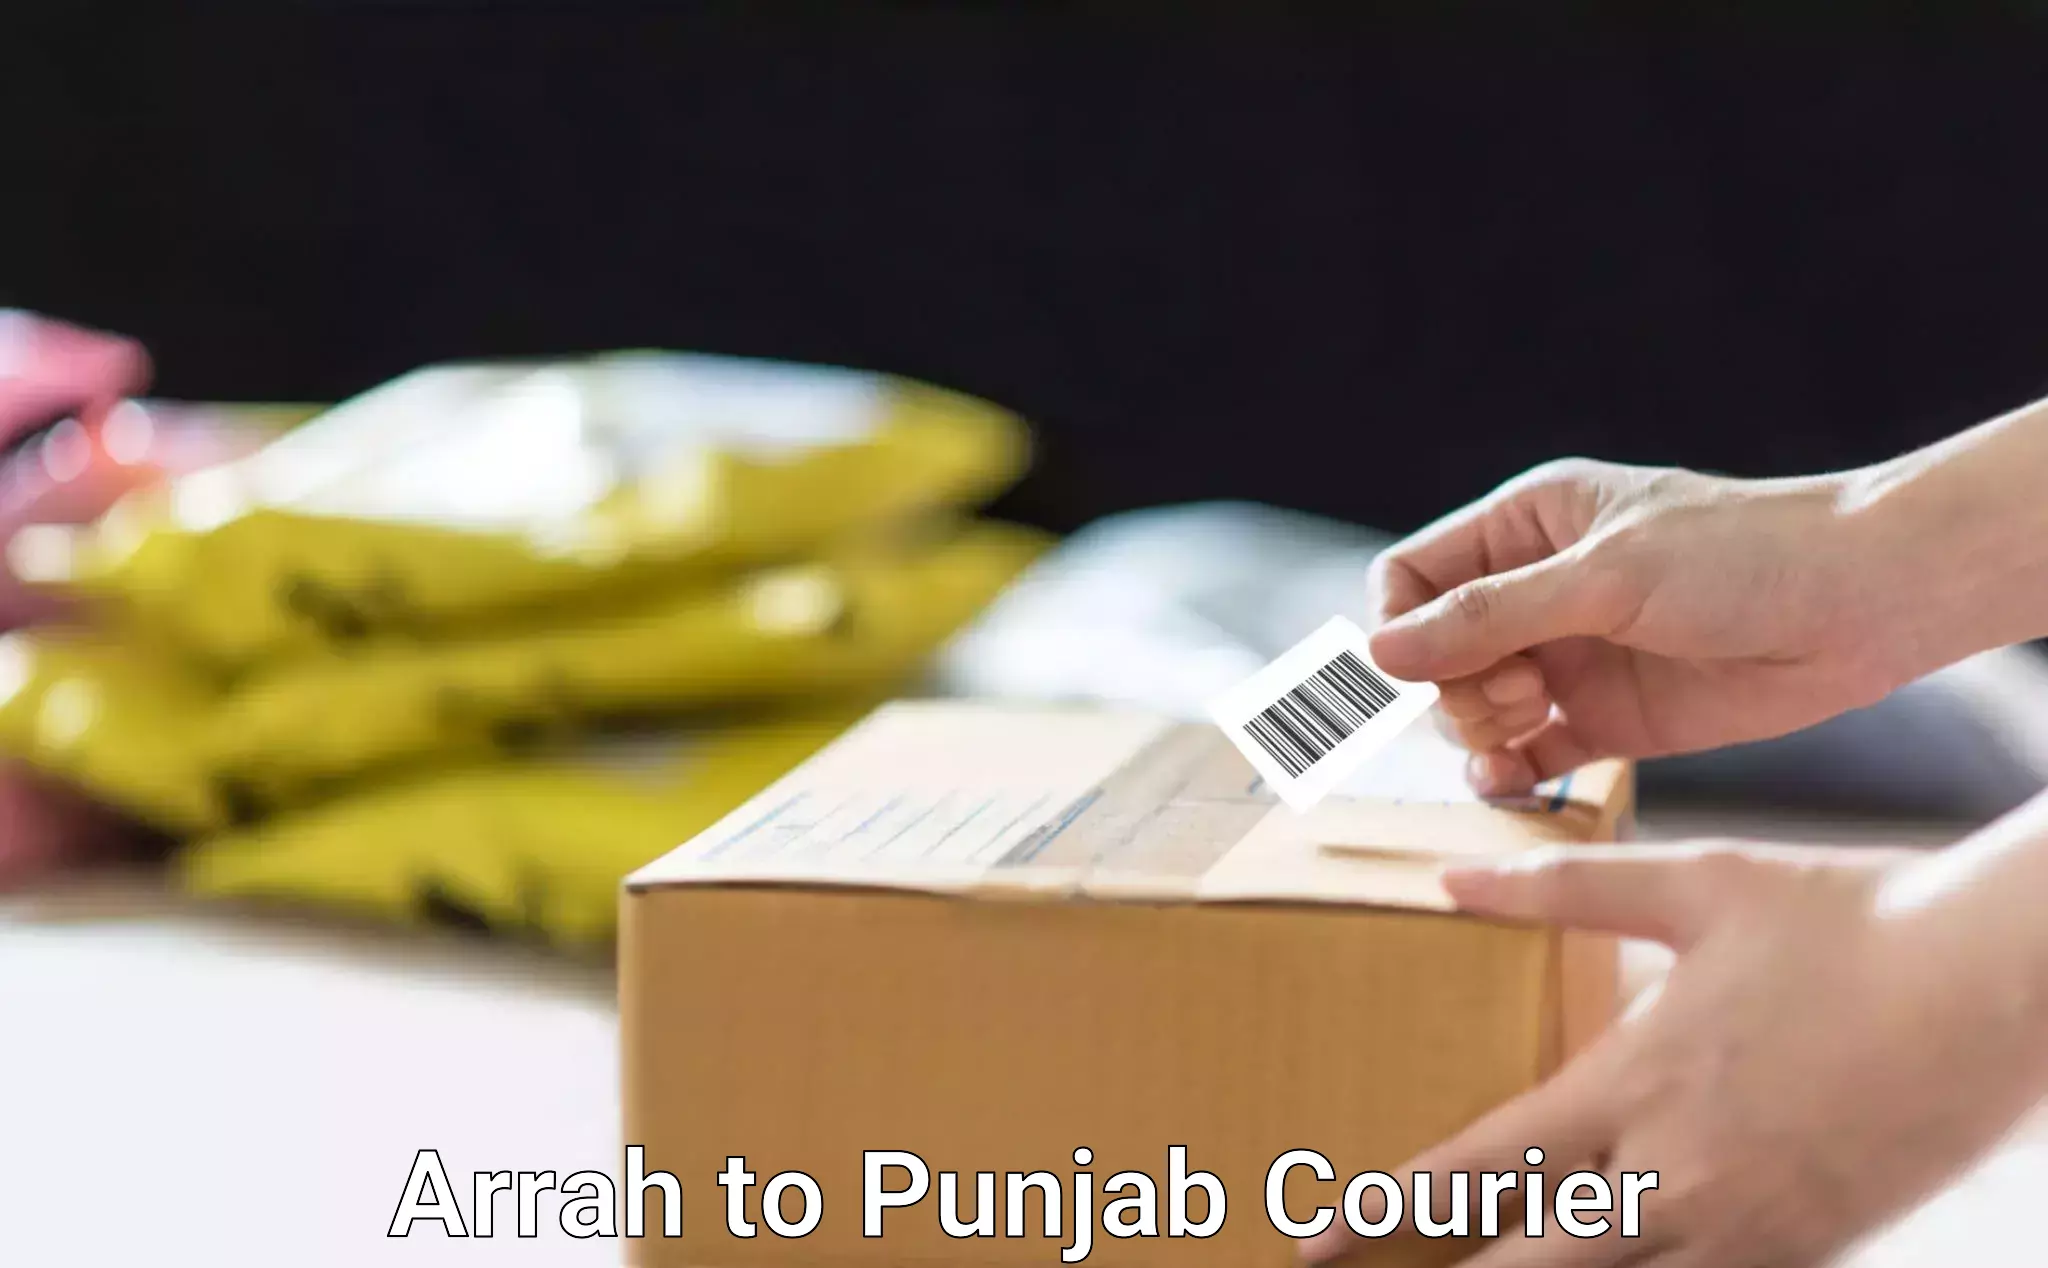 Professional packing and transport Arrah to Punjab